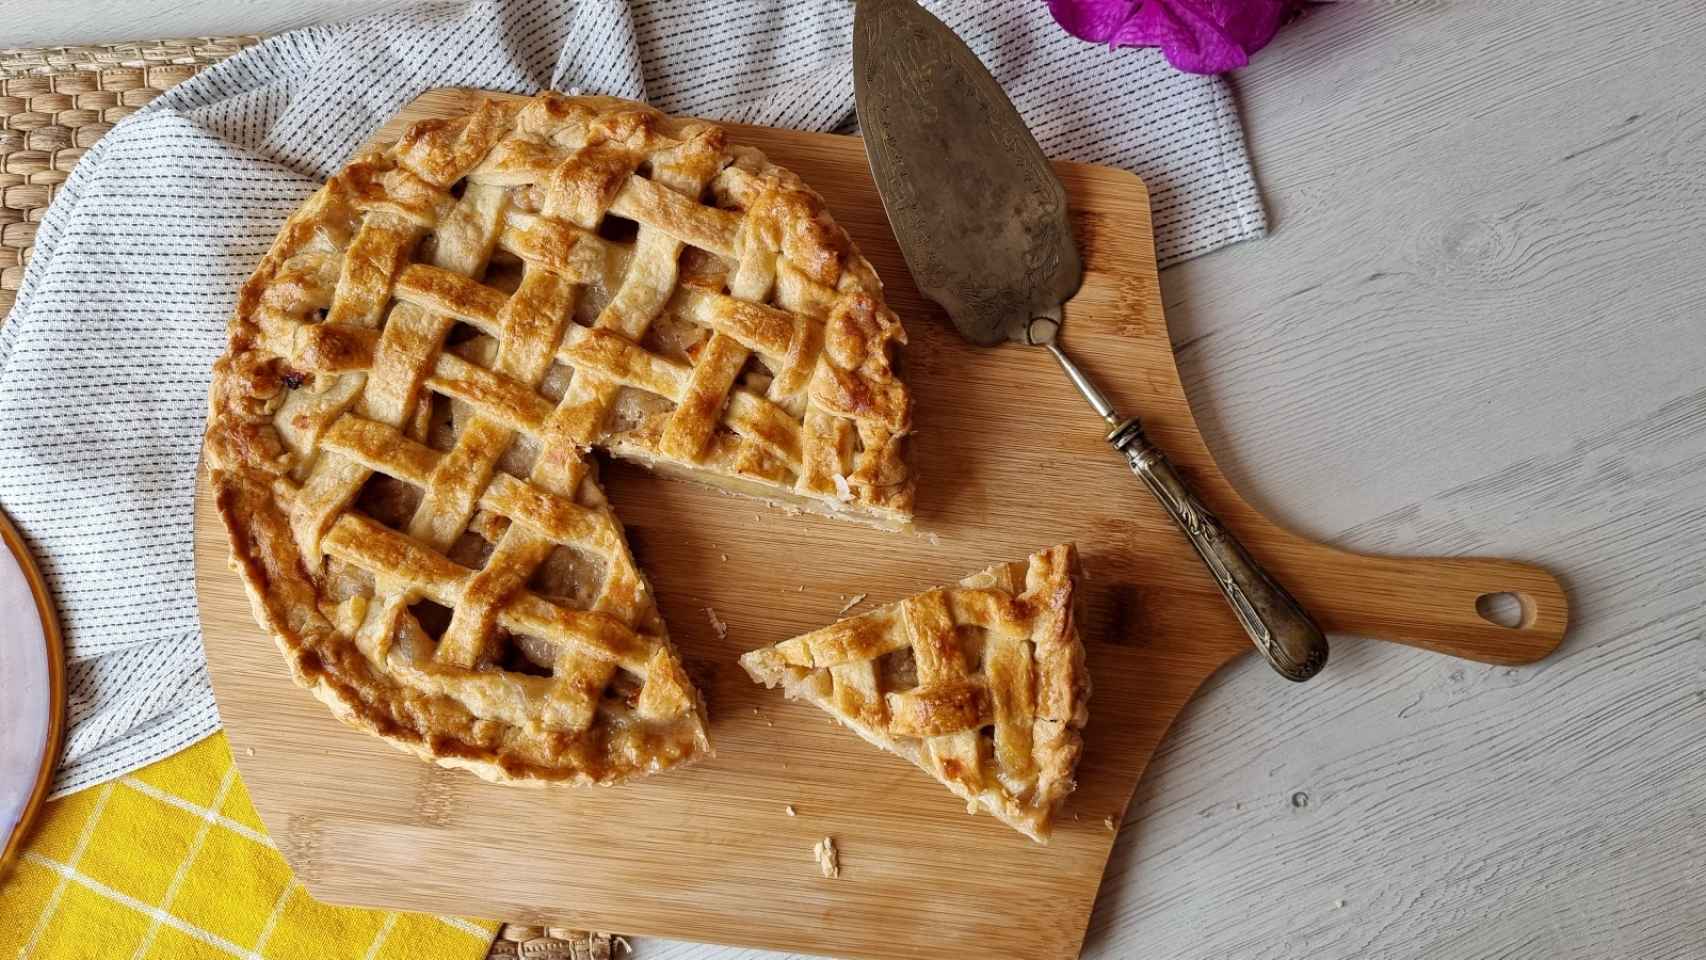 Tarta de manzana estilo Apple Pie americana, una receta para triunfar